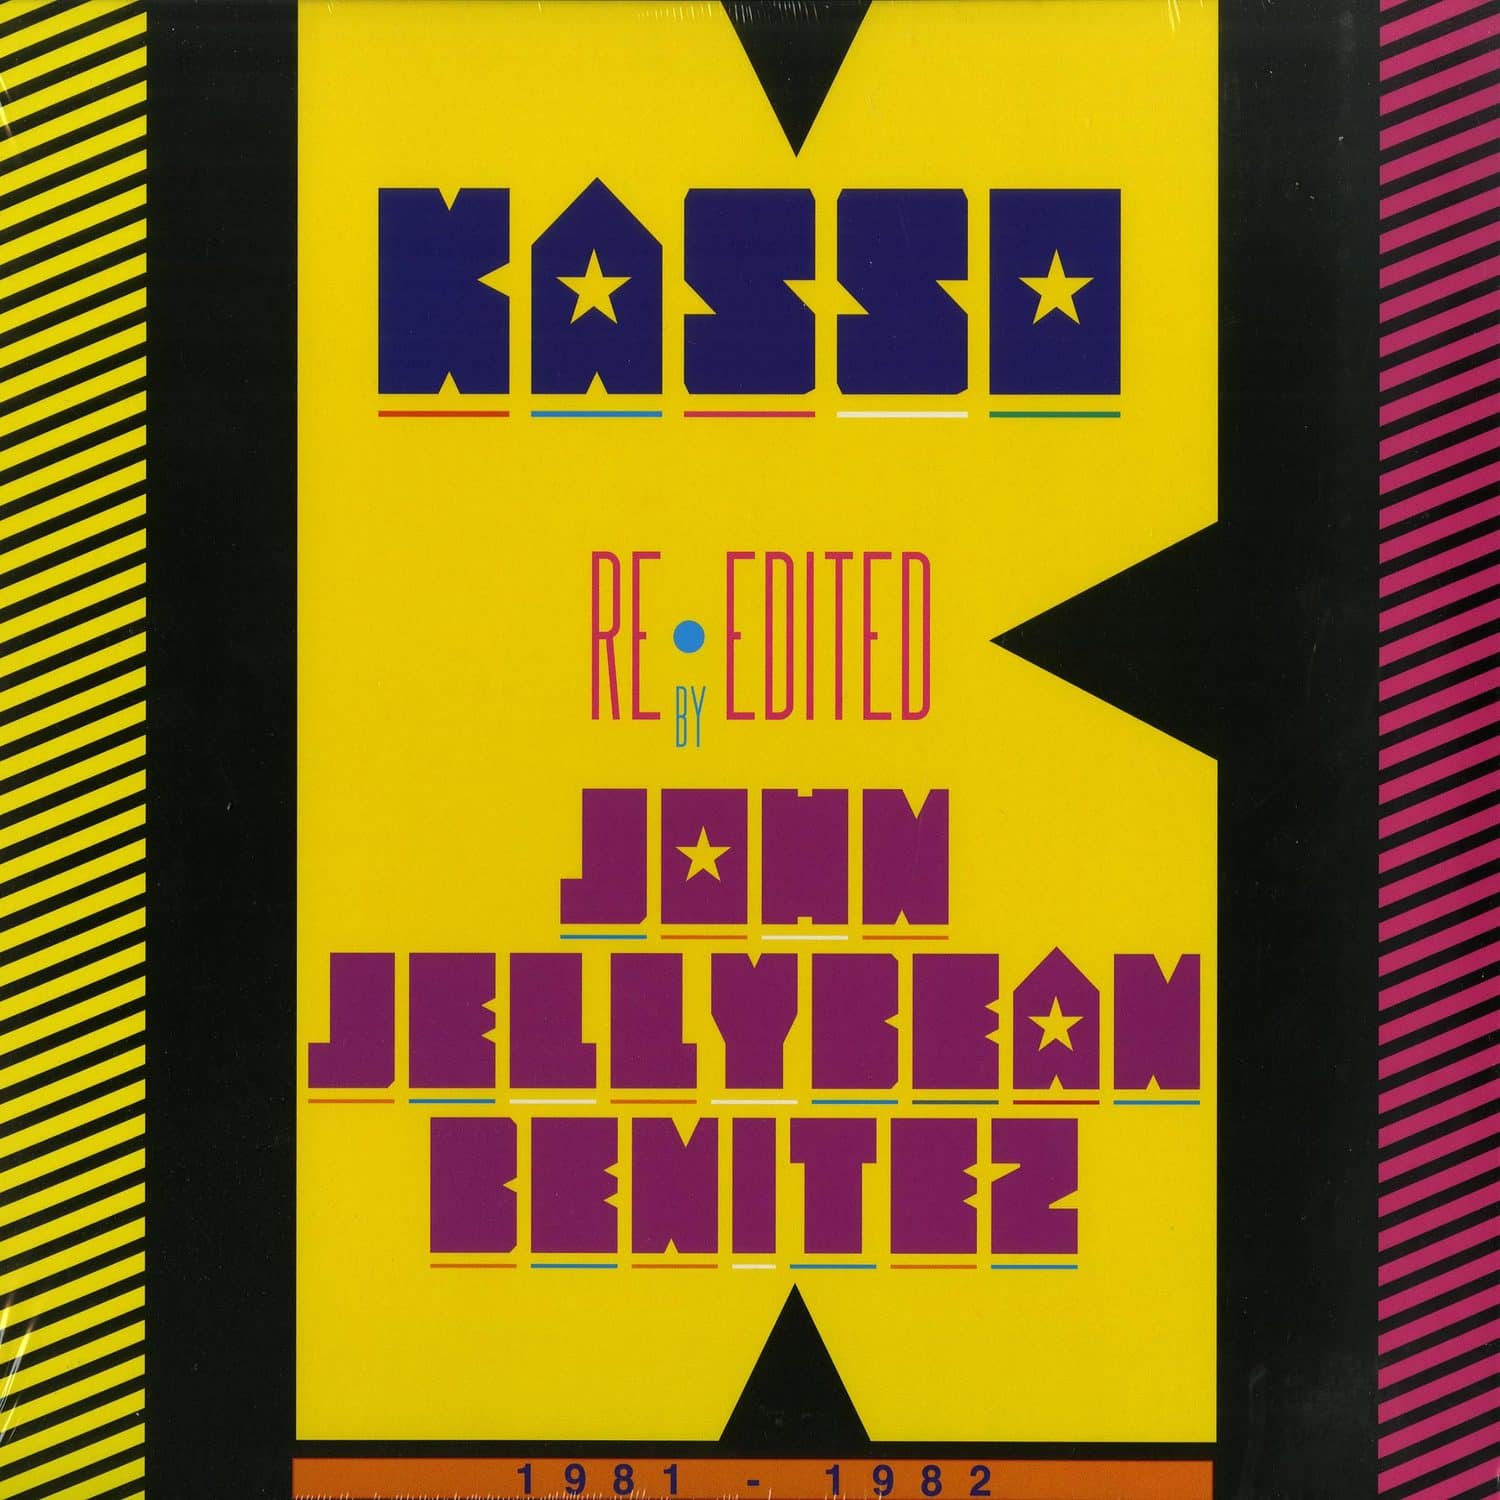 Kasso - Re-Edited by John Jellybean Benitez